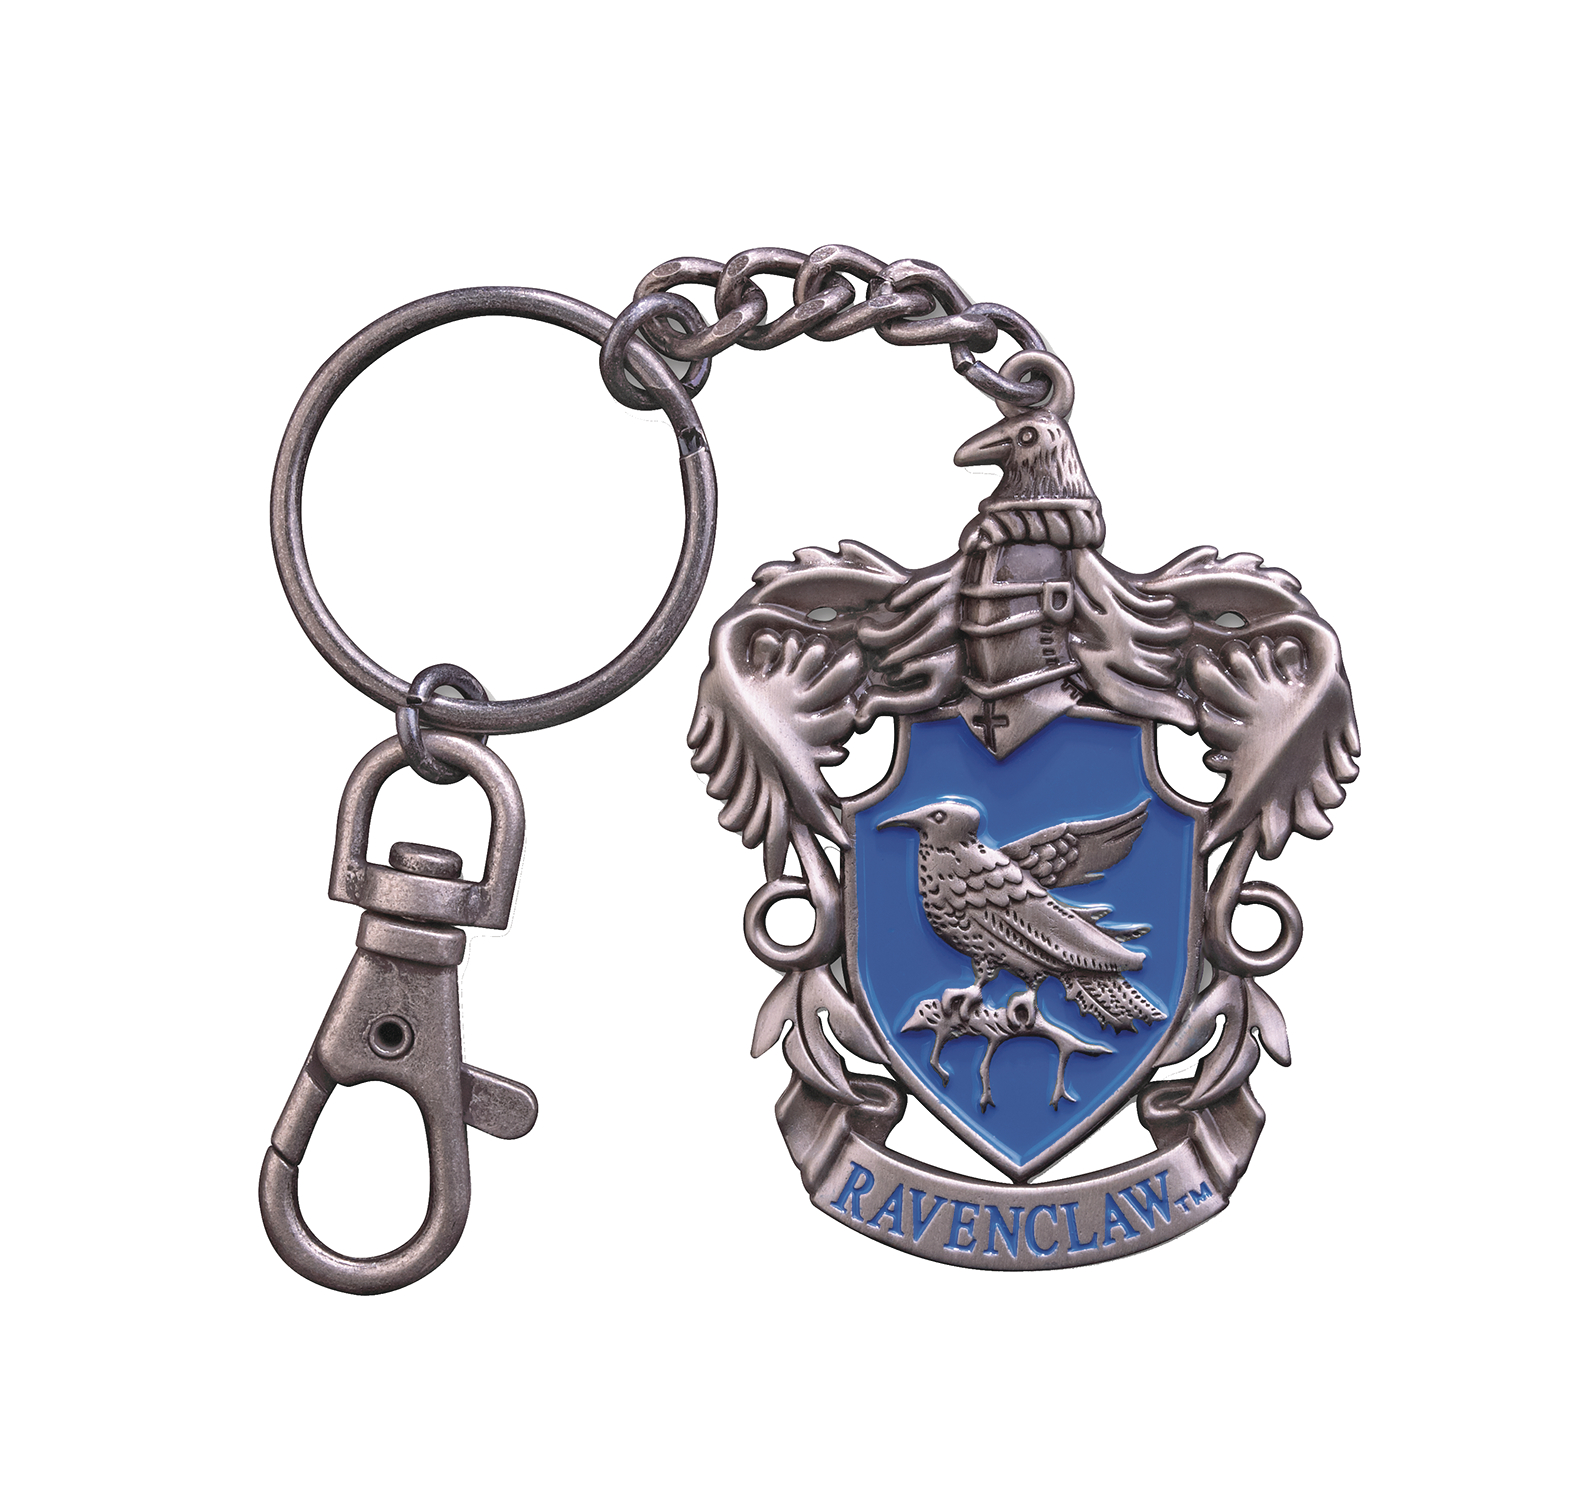 Ravenclaw Crest Metal Metall Schlüsselanhänger Keyring 4,5x6 cm Harry Potter 